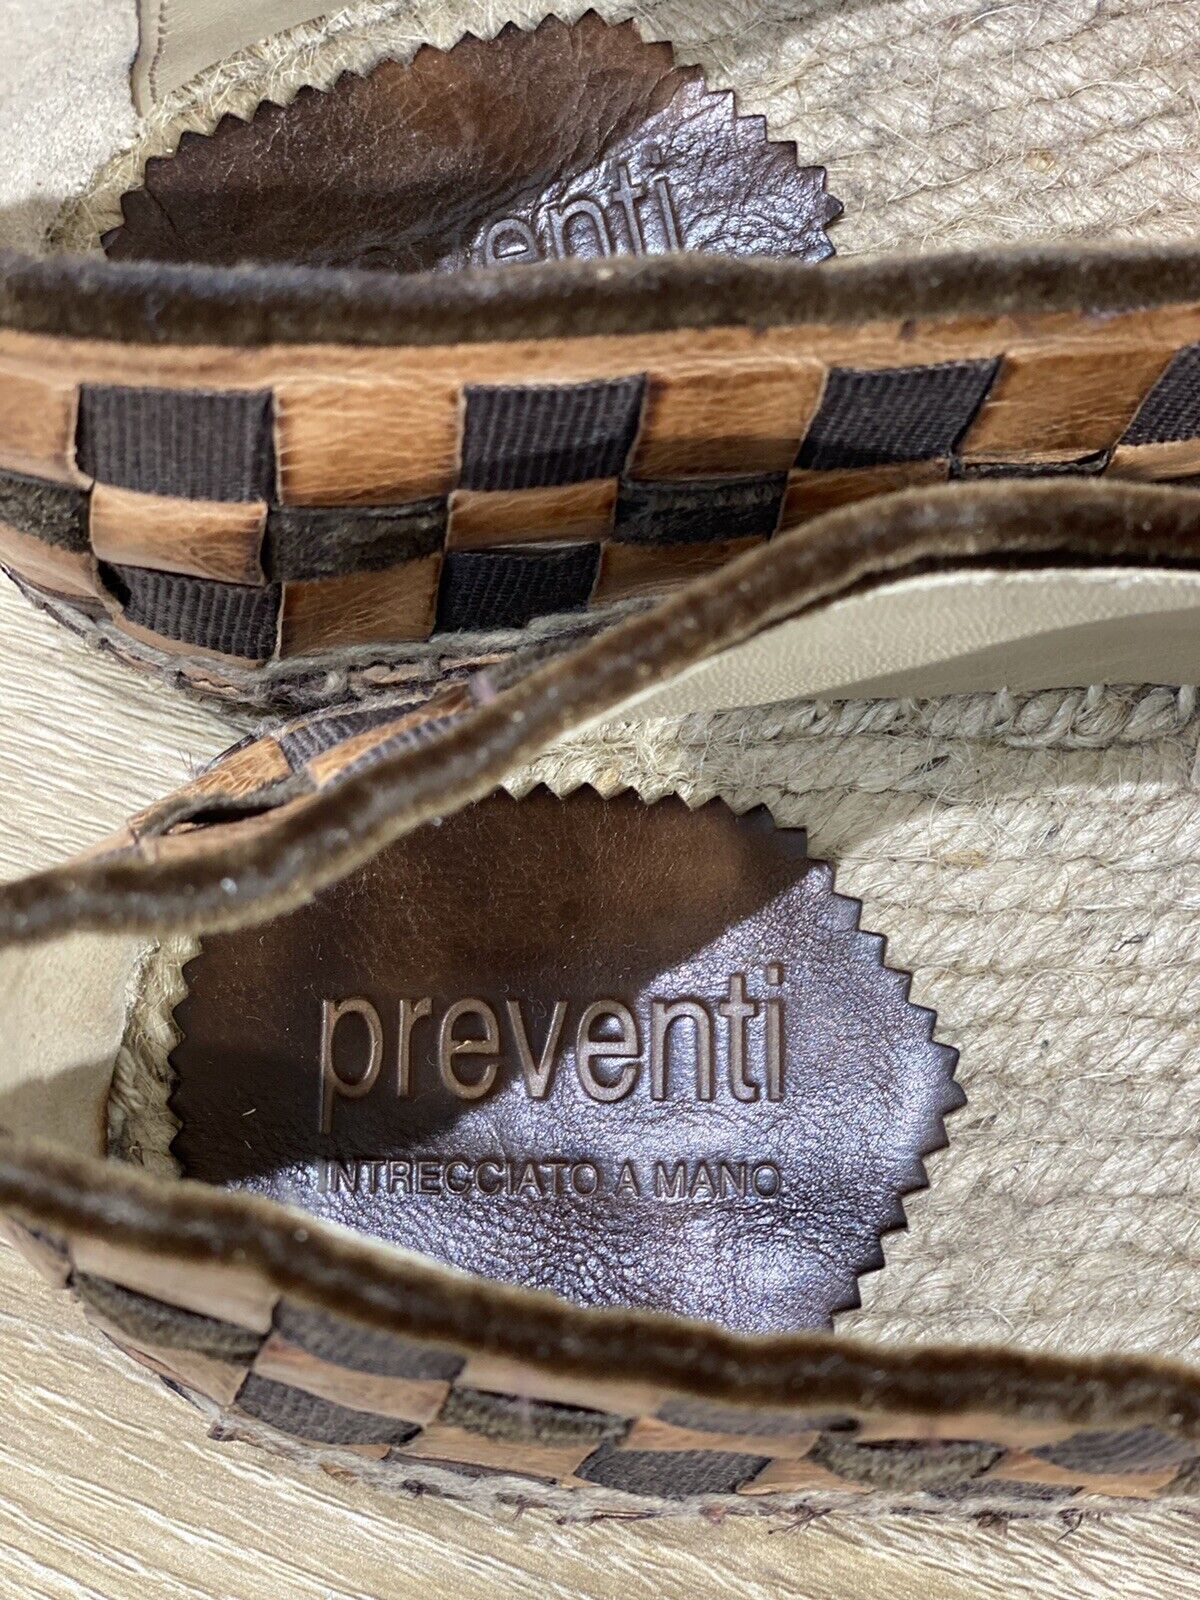 Preventi Espadrilles Uomo In Pelle Intrecciata Cuoio Luxury Men Shoe Preventi 40